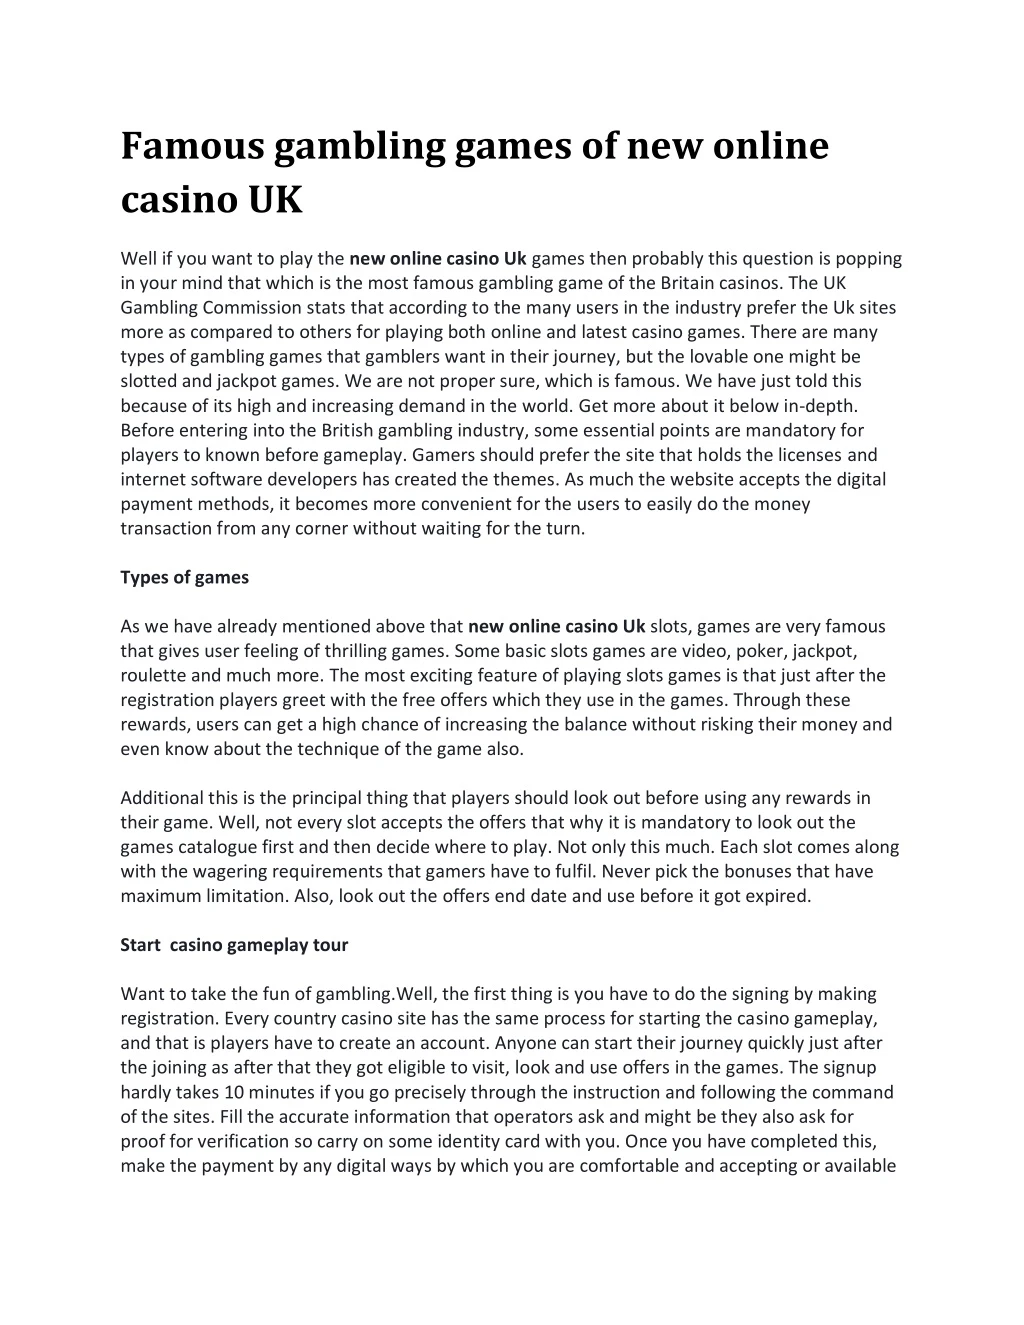 famous gambling games of new online casino uk